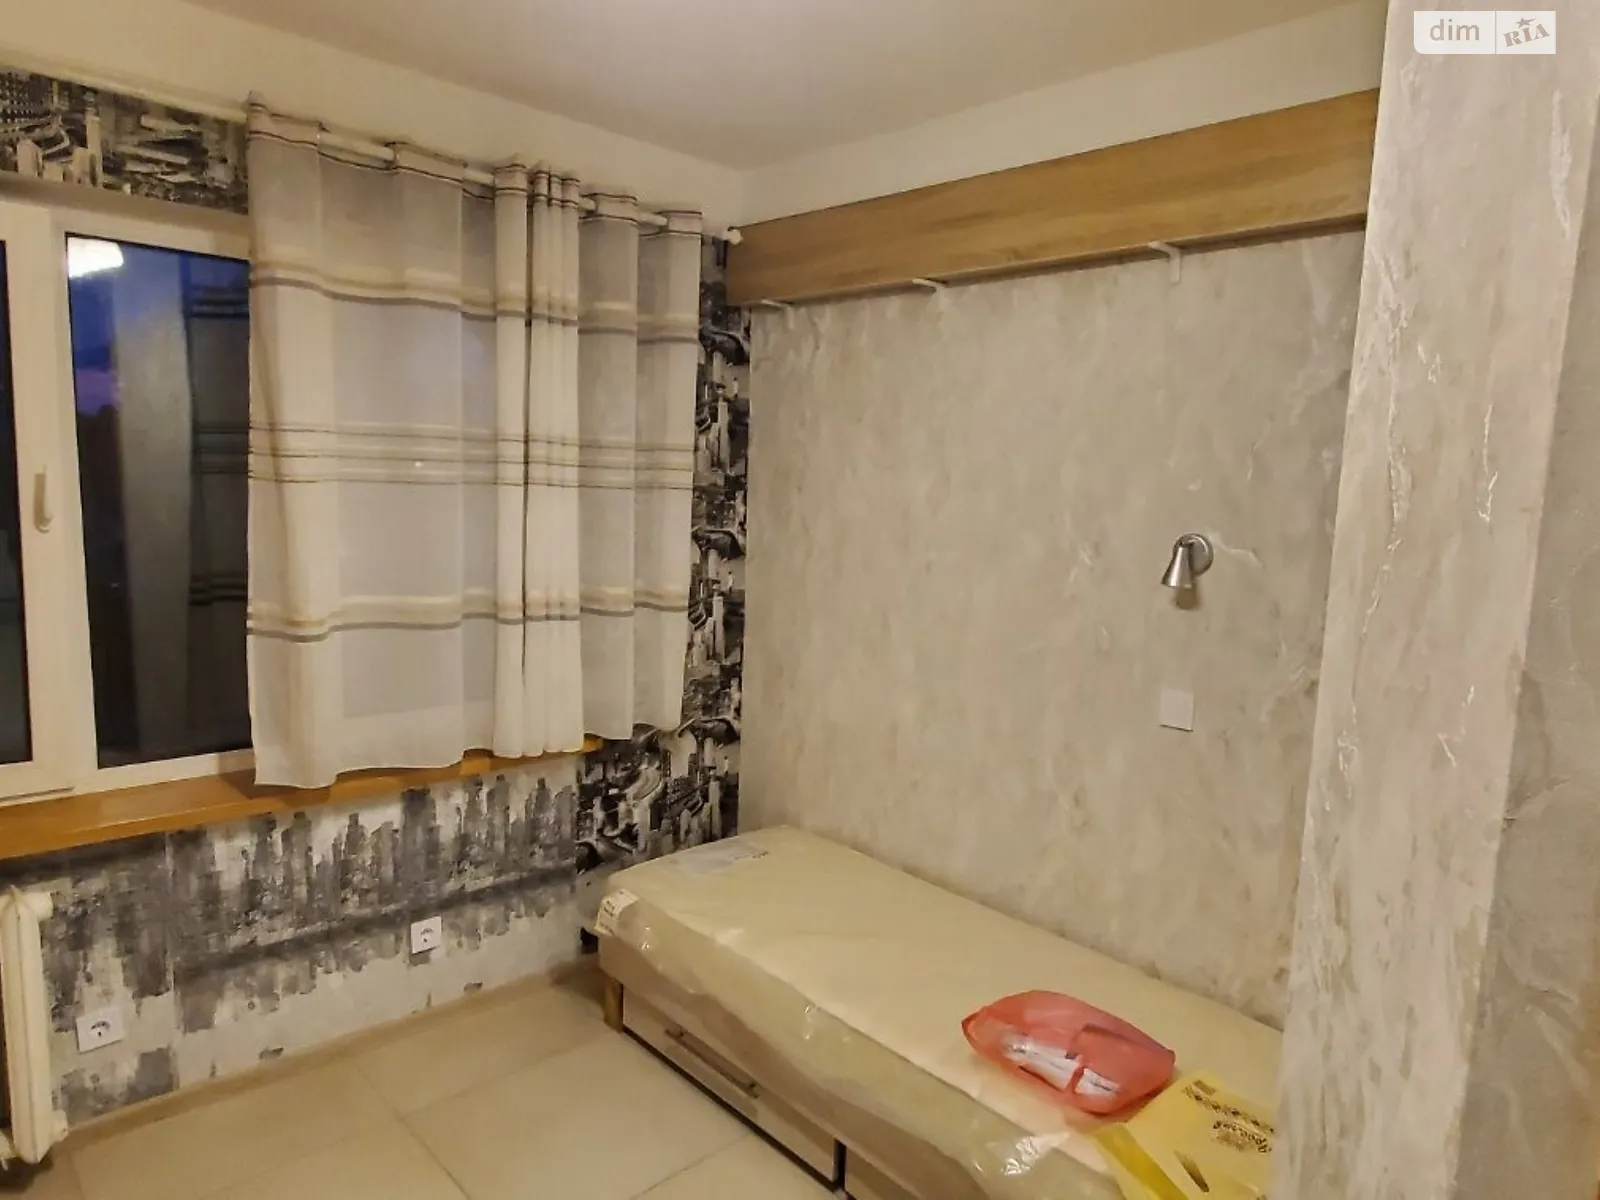 Продается комната 18.5 кв. м в Киеве, цена: 18500 $ - фото 1